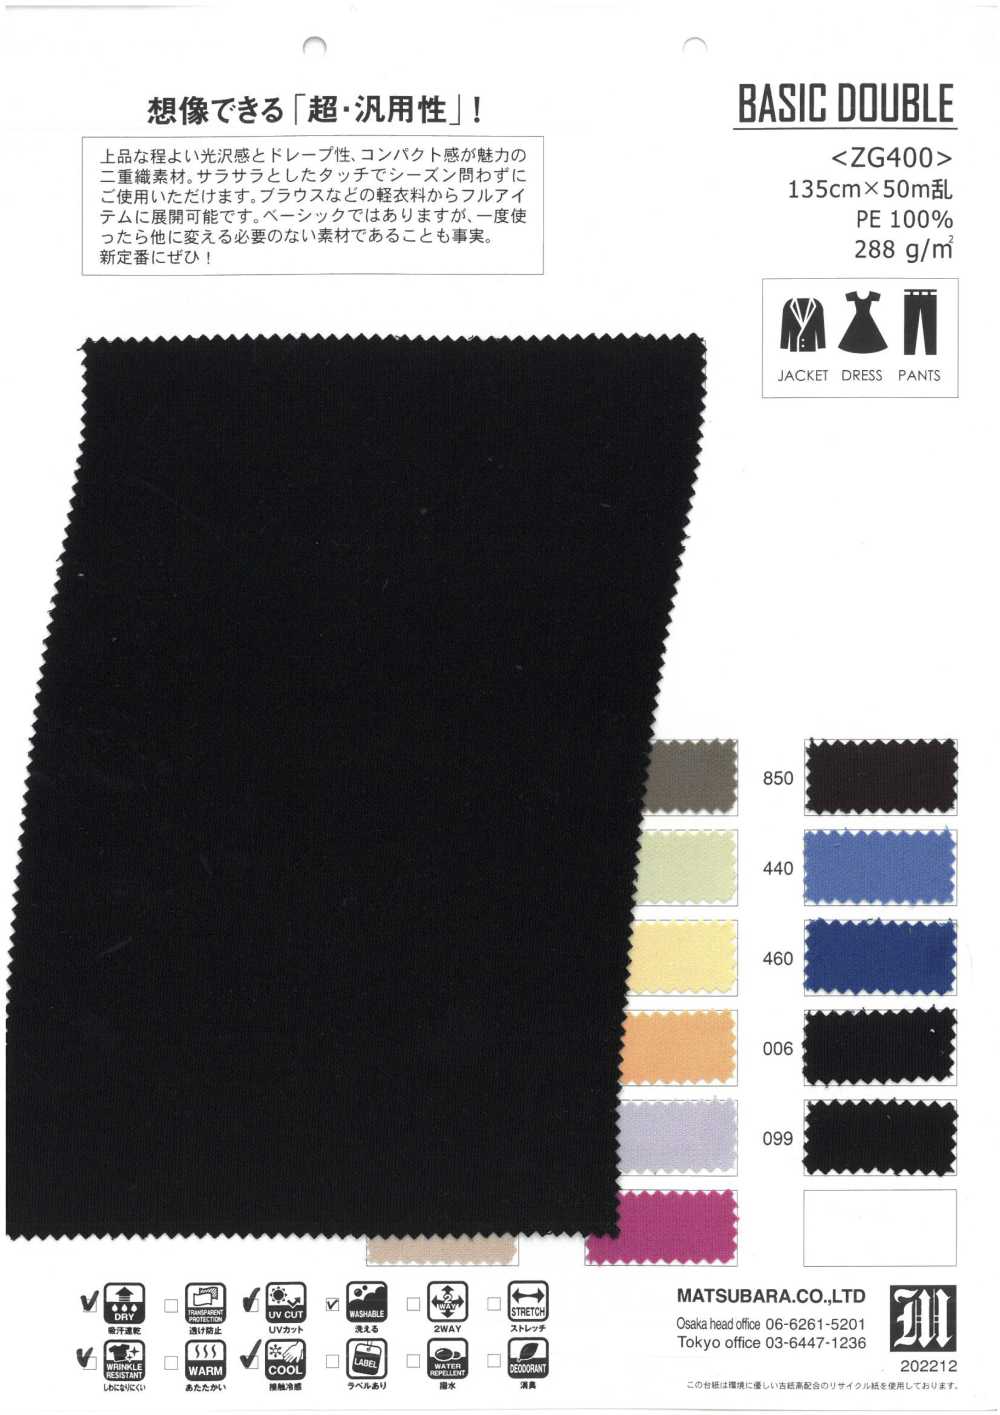 ZG400 BASIC DOUBLE[Textile / Fabric] Matsubara